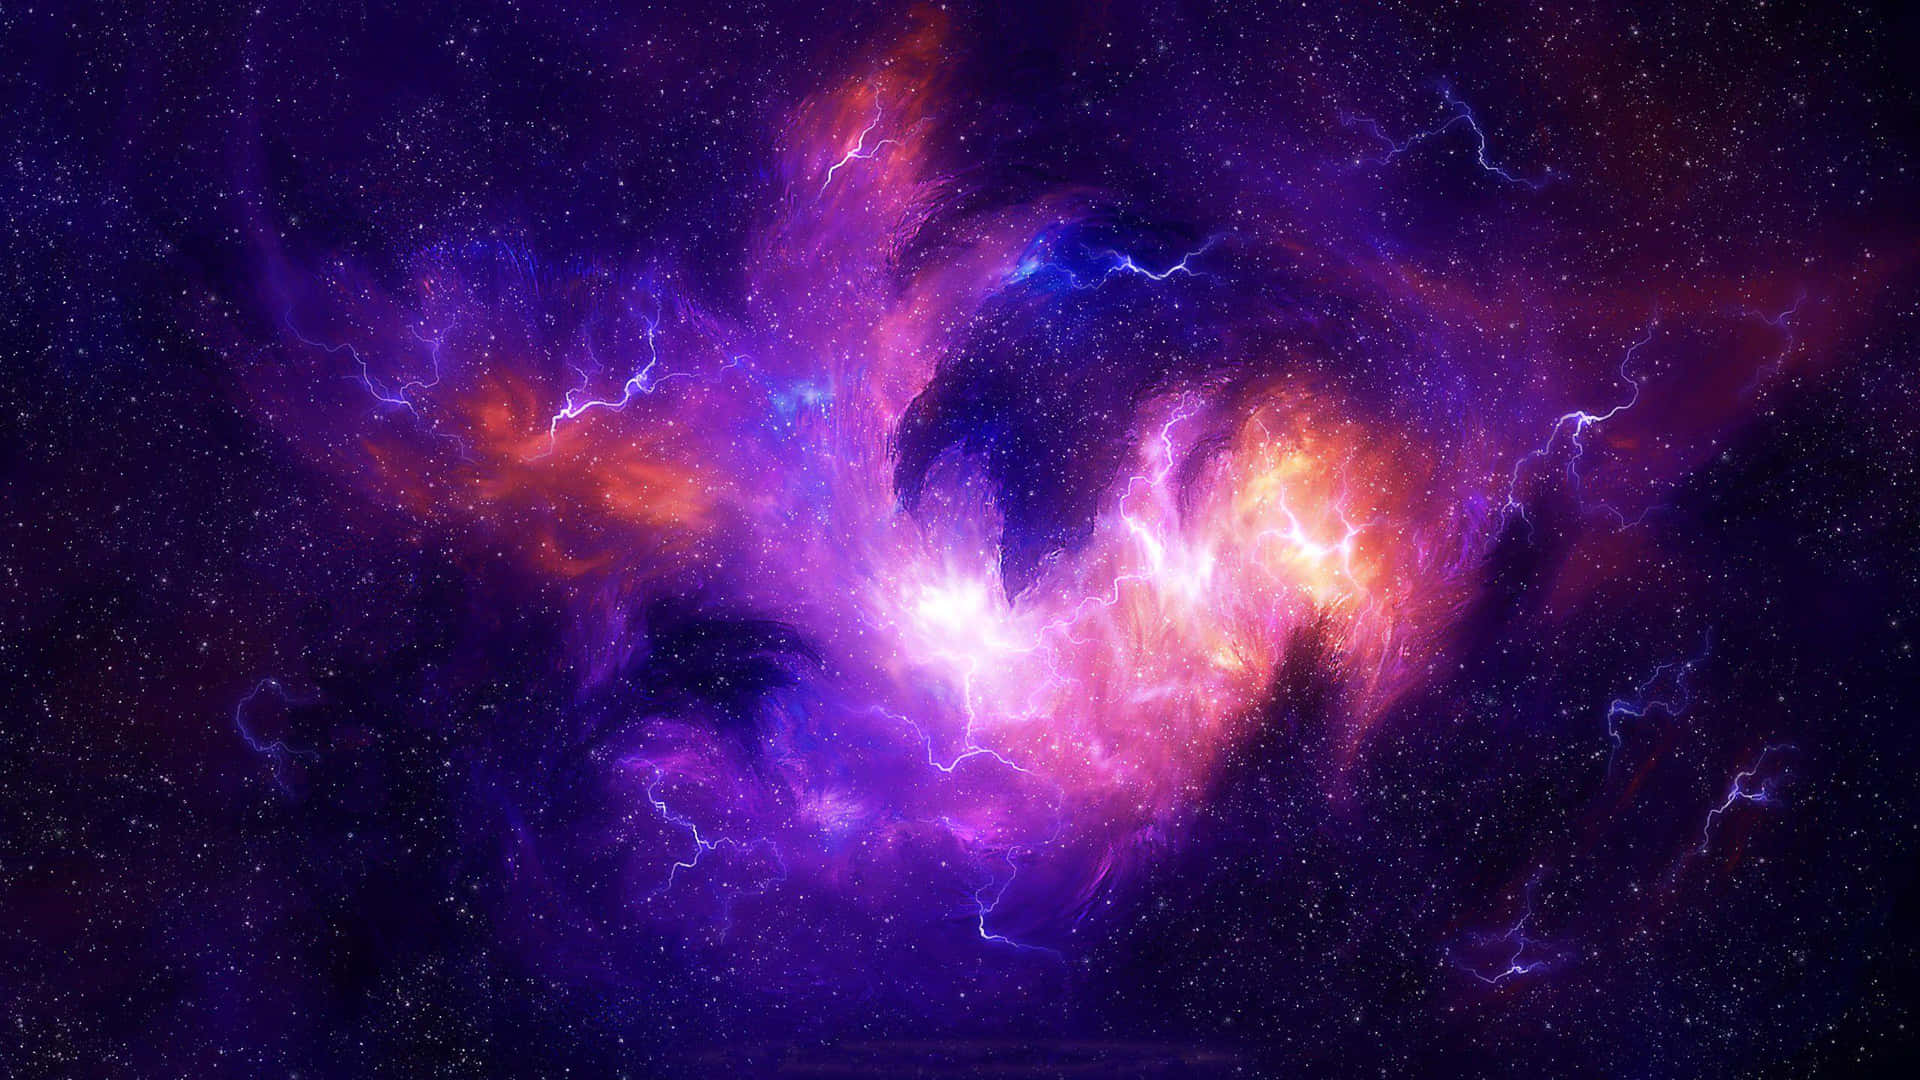 A Purple And Blue Space With A Nebula